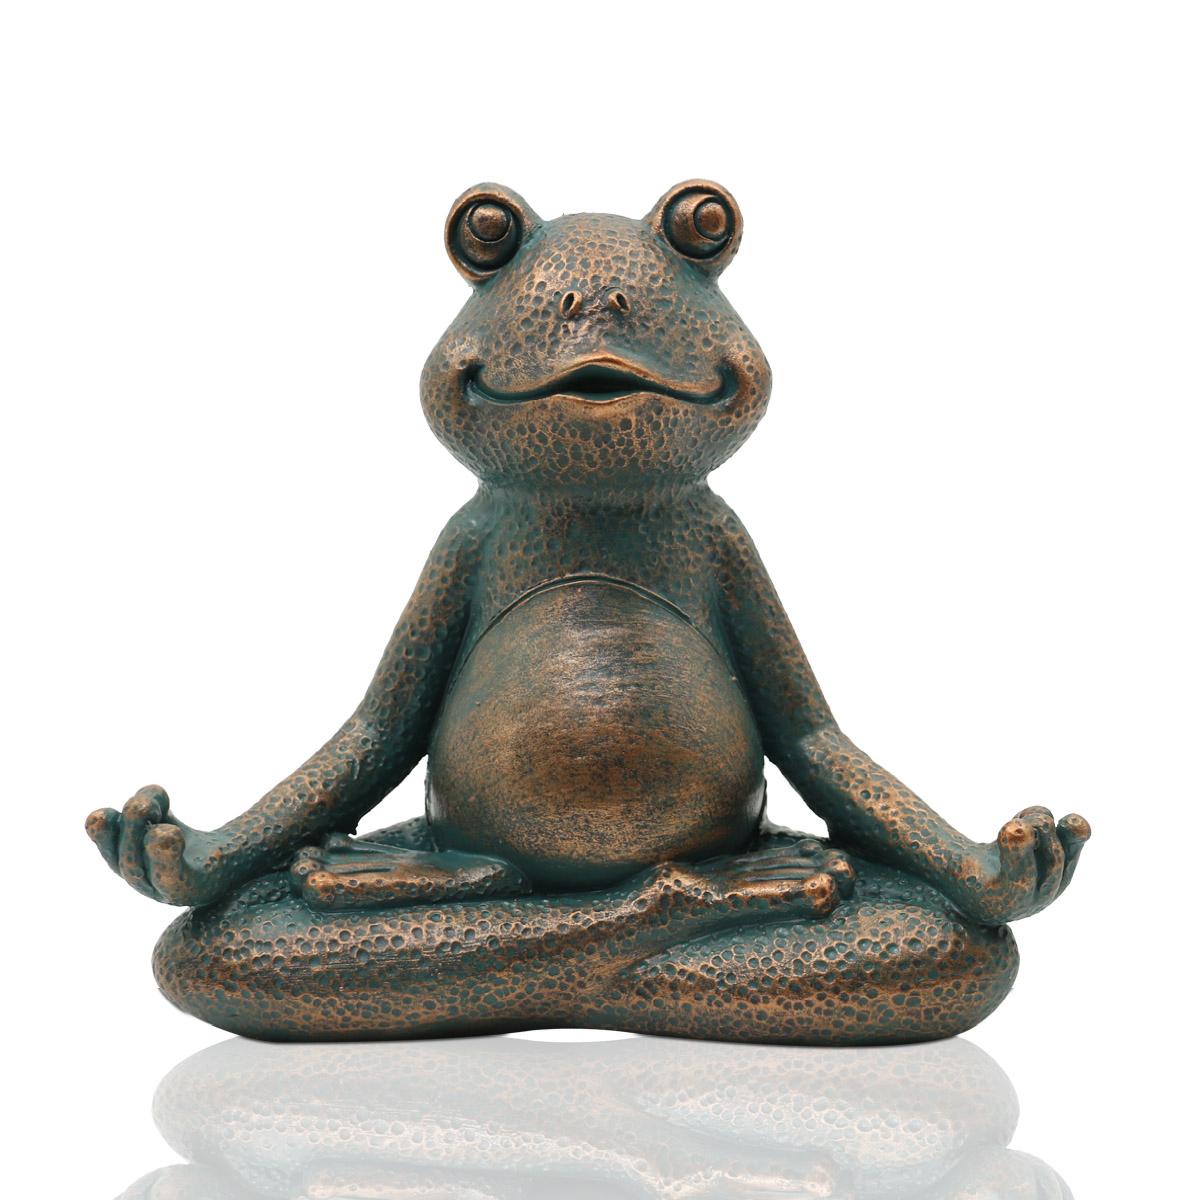 Zen Decor Ideas - MINI Yoga Frog Statue Garden Decoration Accessories Meditating Frog Miniature Figurine Frog - Personal Hour for Yoga and Meditations 